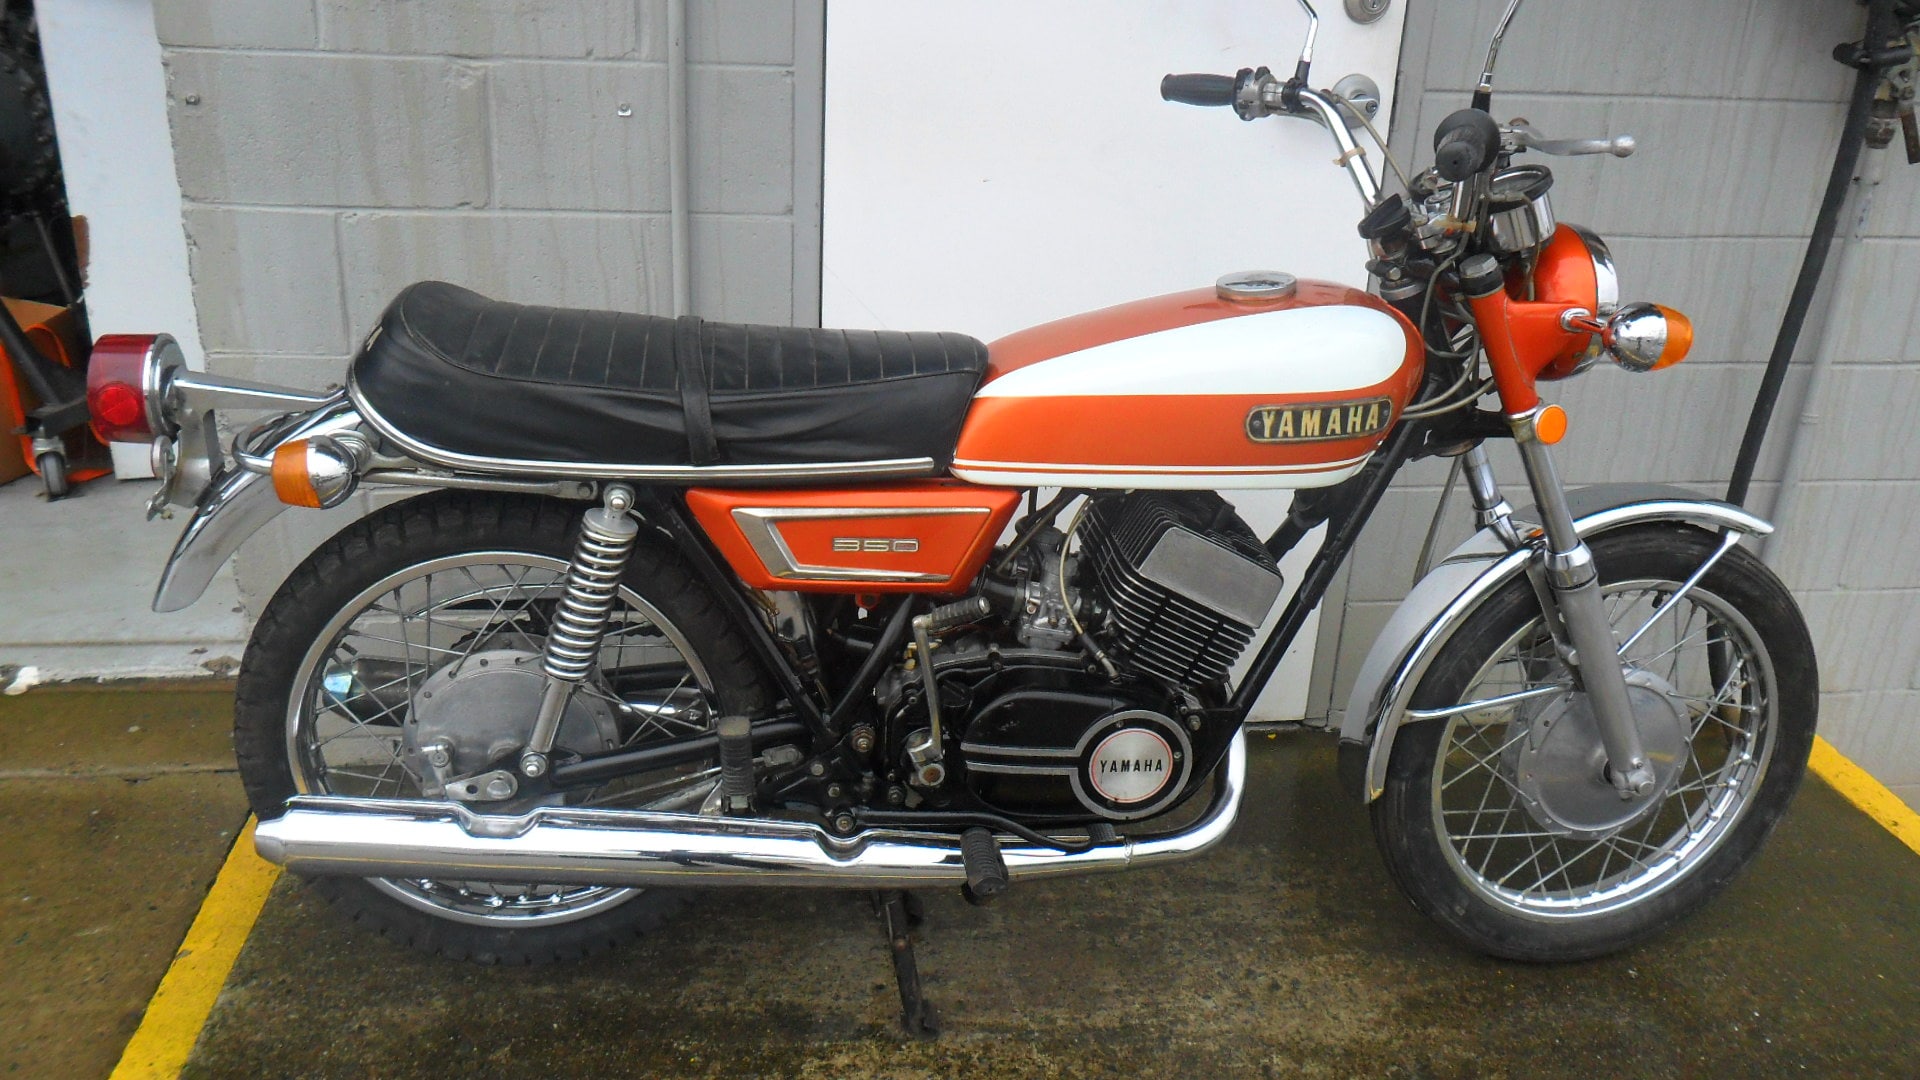 YAMAHA R5 / RD350, original, runs OK, rare - Classic Motorcycle Sales